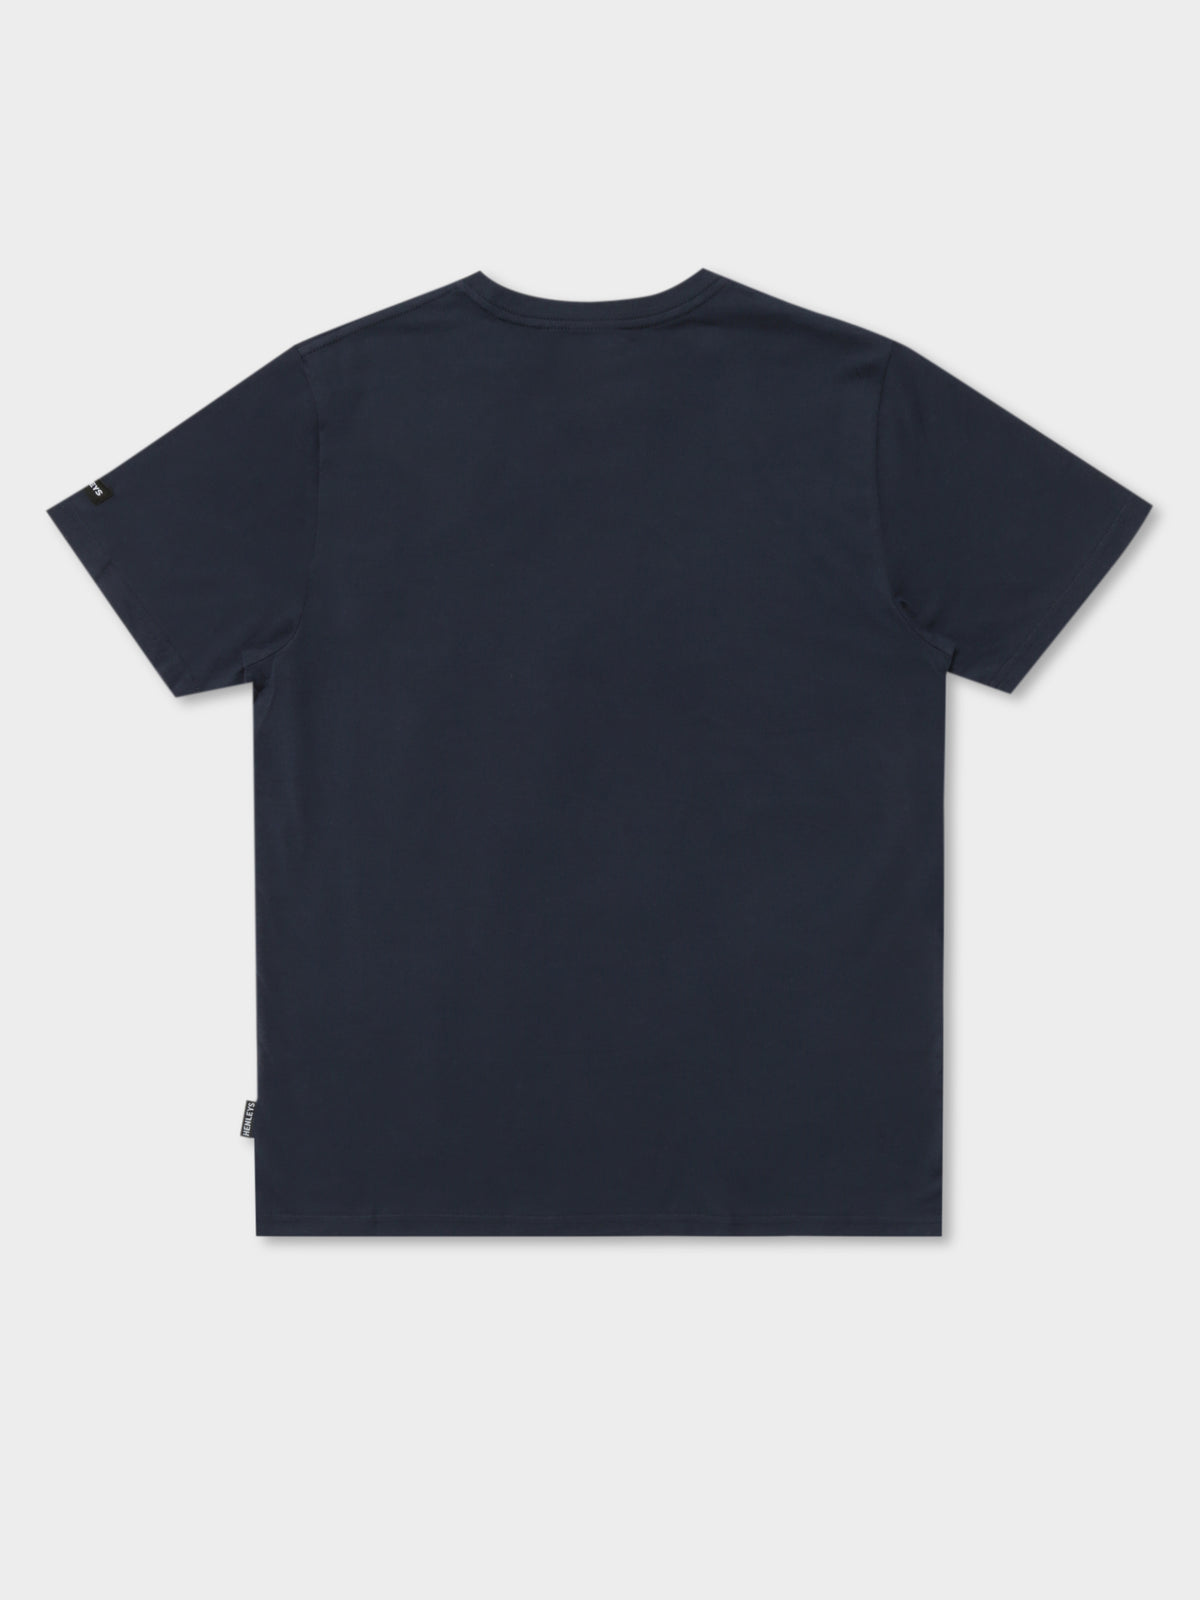 Liam T-Shirt in Navy